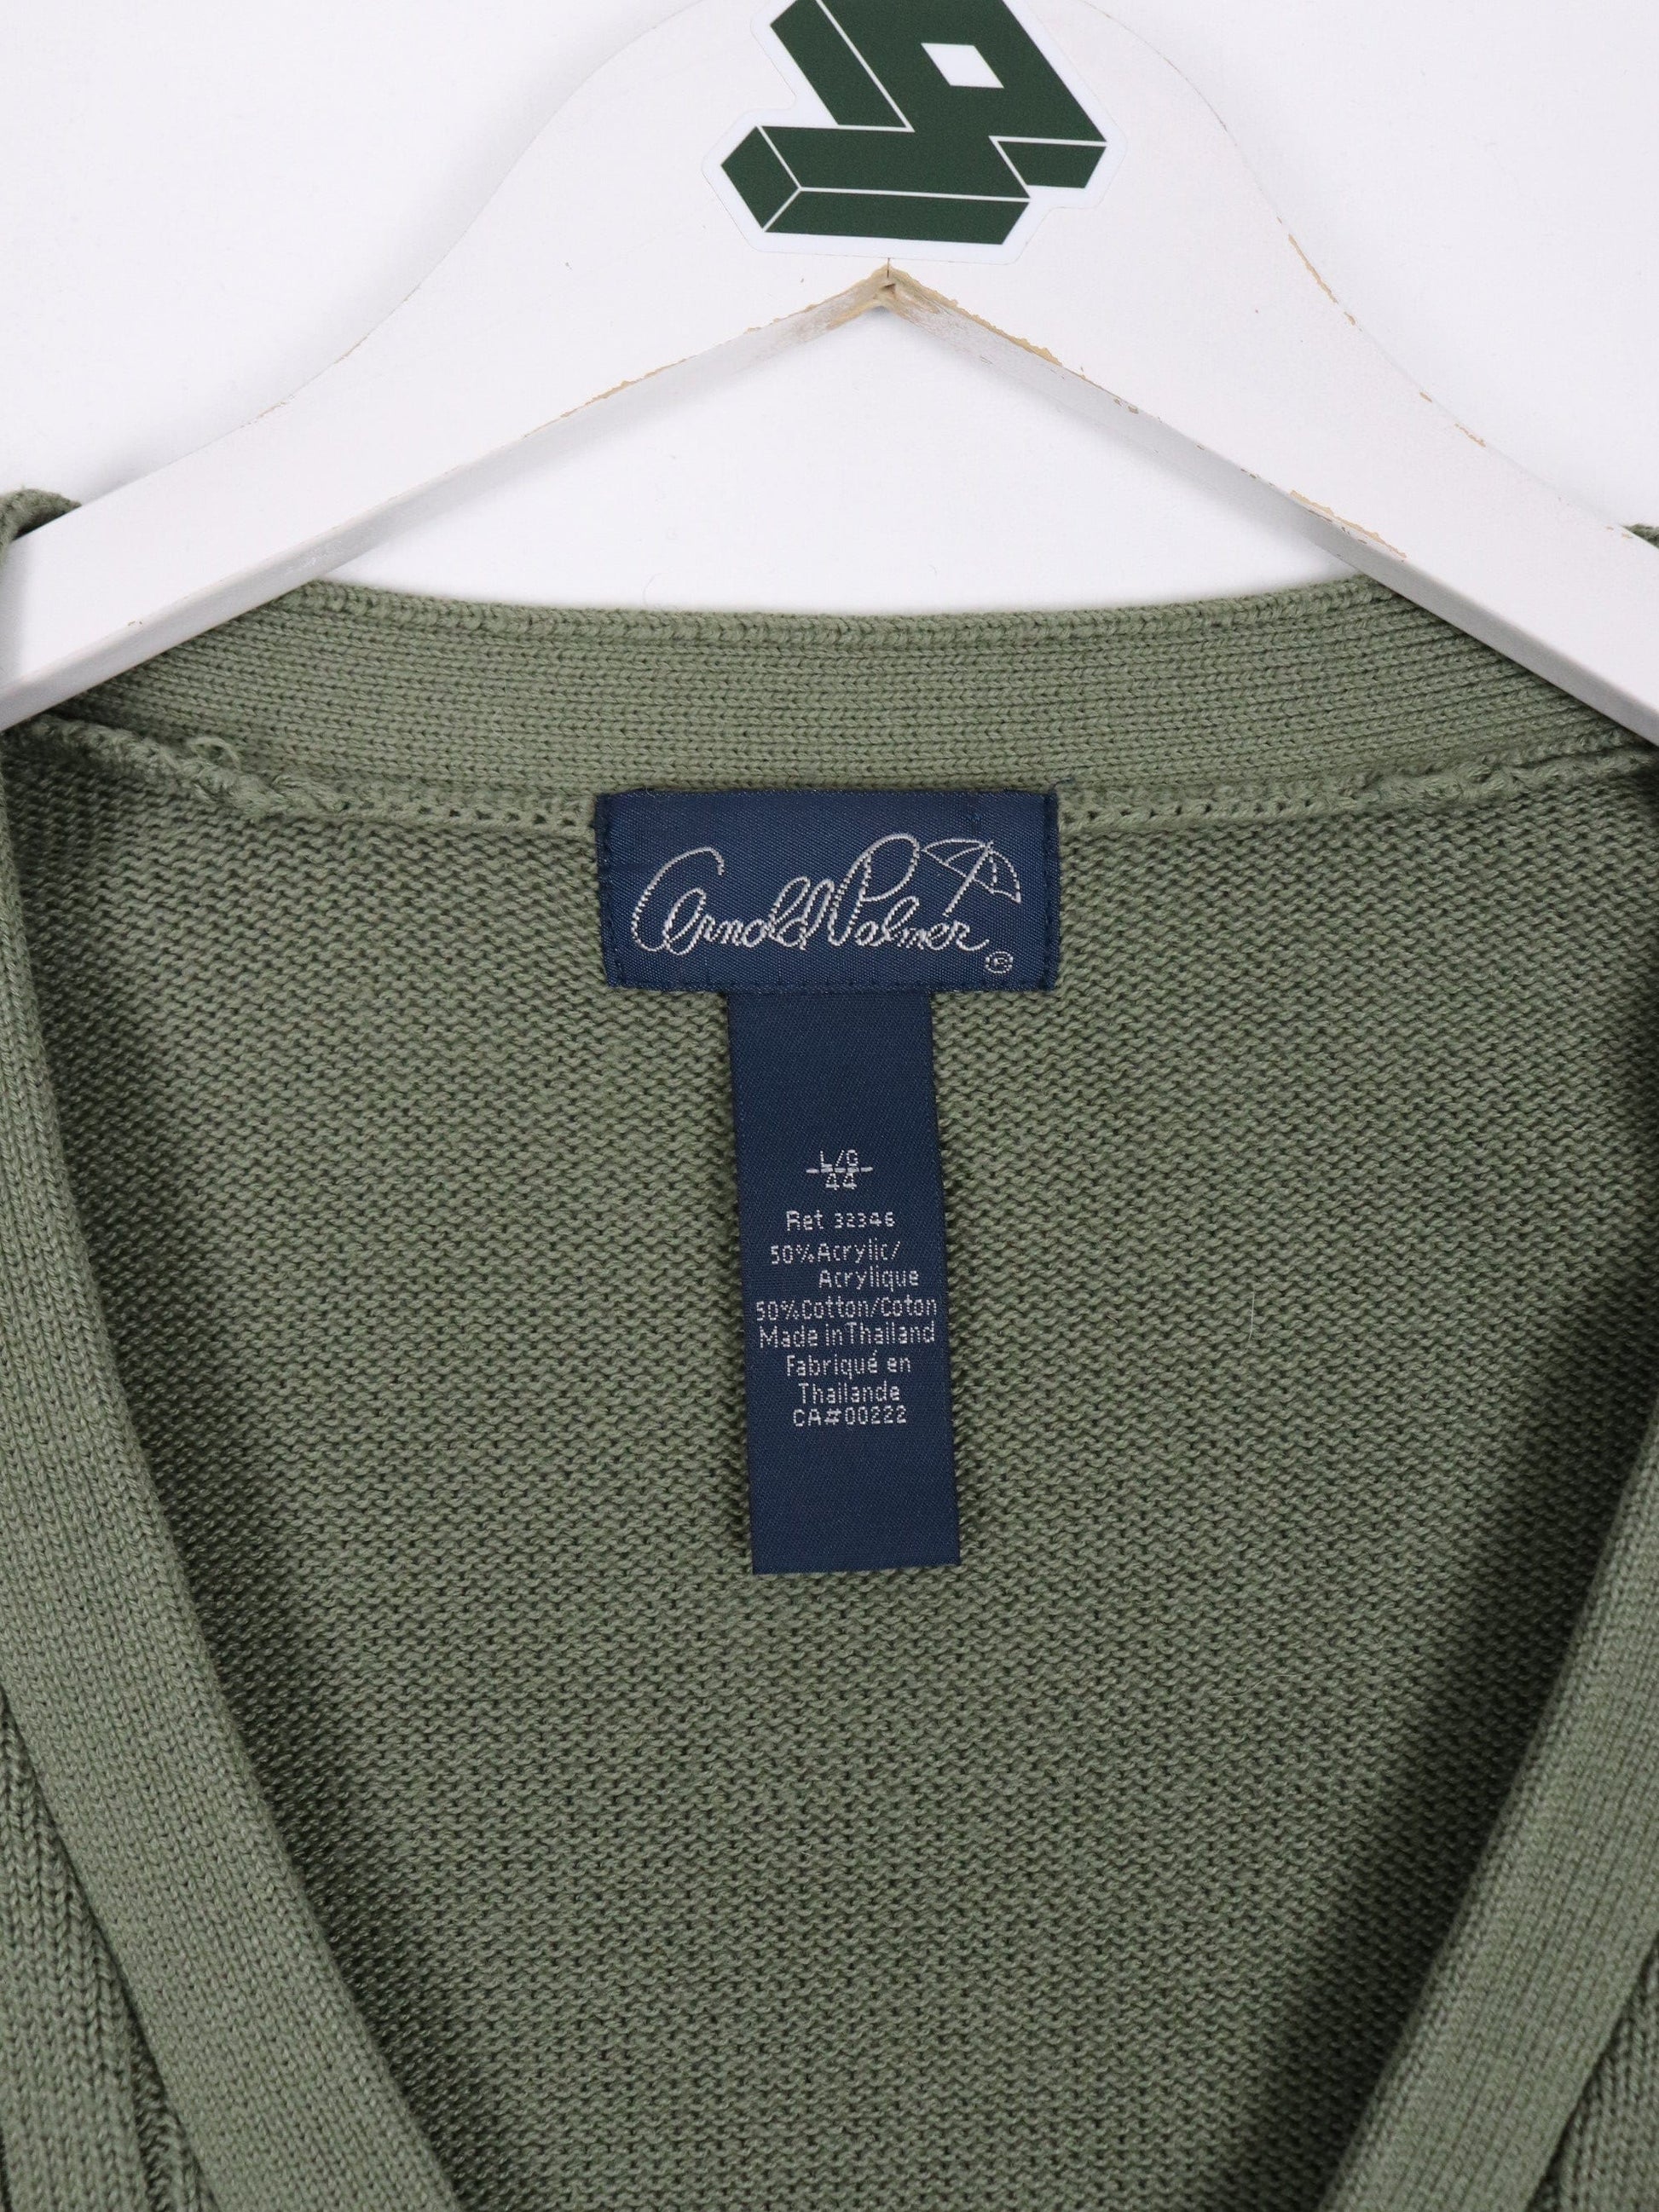 Other Knitwear Vintage Arnold Palmer Vest Mens Large Green Knit Cardigan Sweater